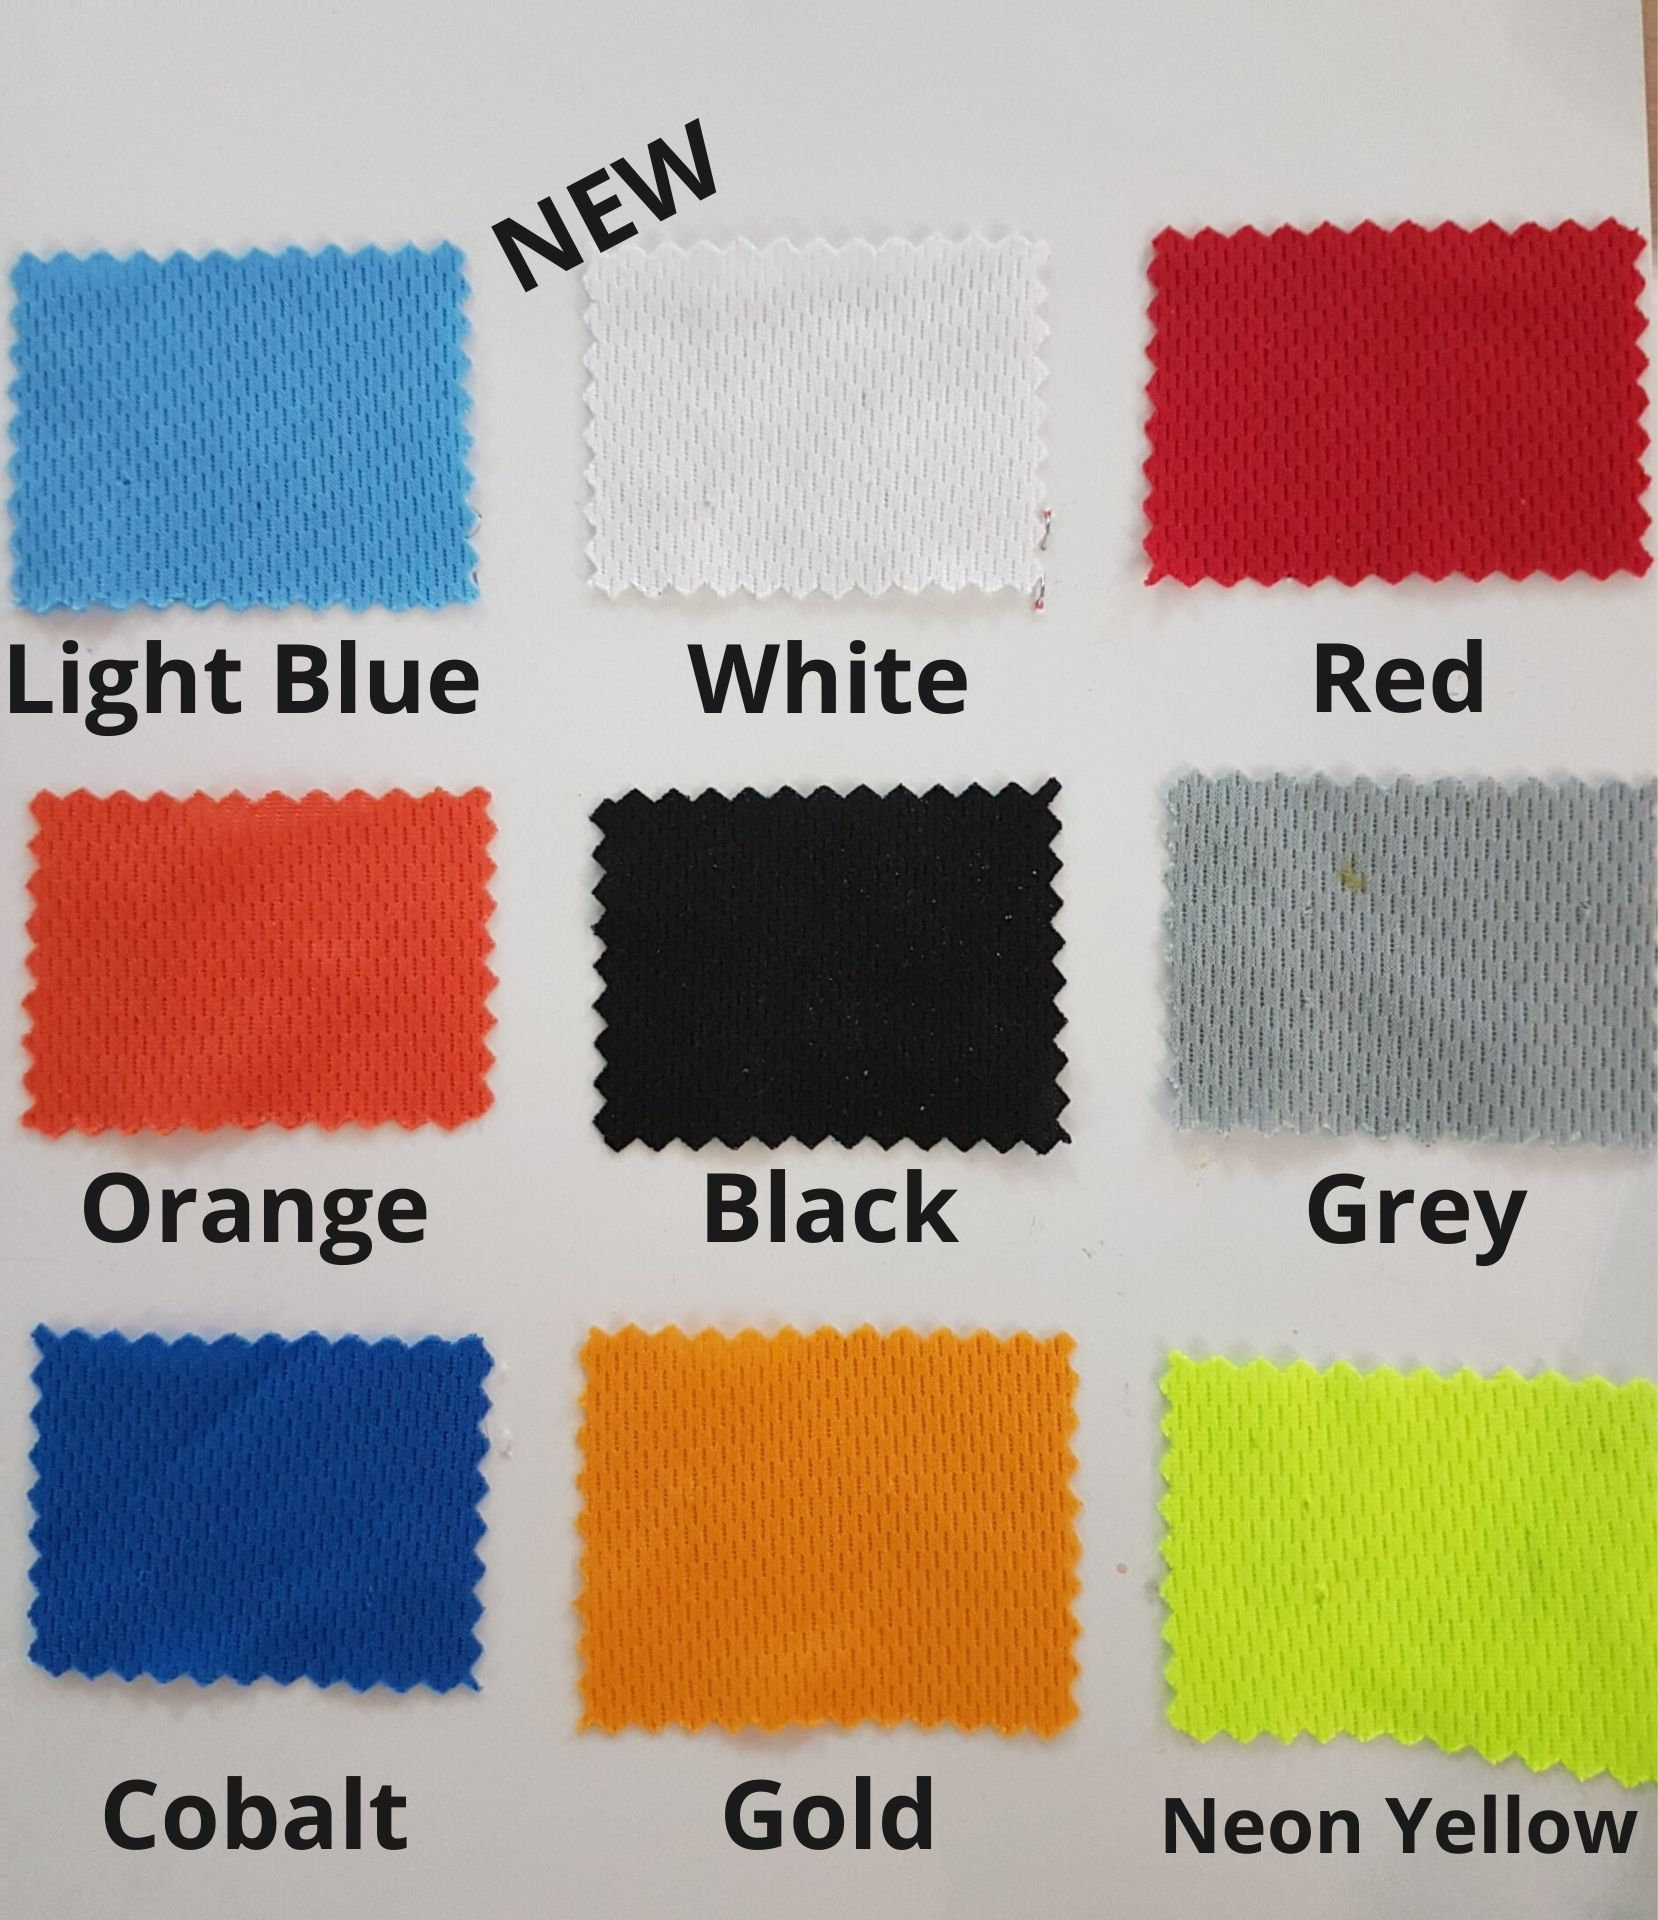 Black Athletic Sports Mesh Knit Polyester Football Jersey Fabric by The  Yard, Apparel Fabric, Muslin Fabric, telas para costura por yardas,Quilt